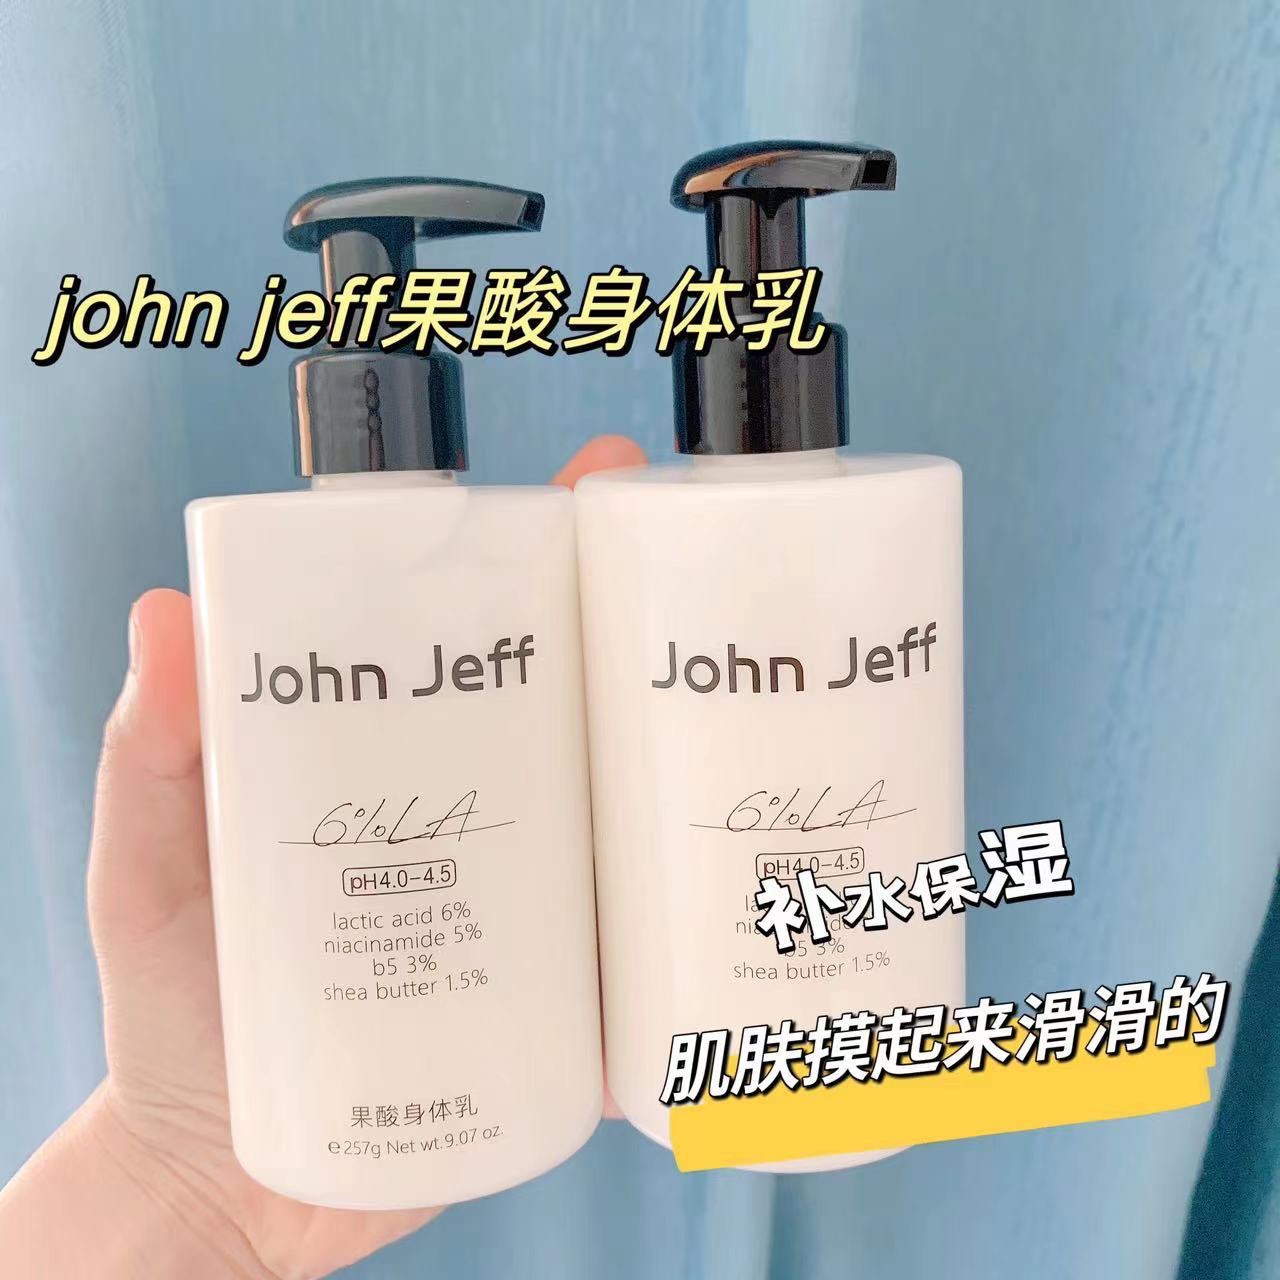 John Jeff6%果酸身体乳光滑肌肤去暗提亮去老废角质补水保湿257ml